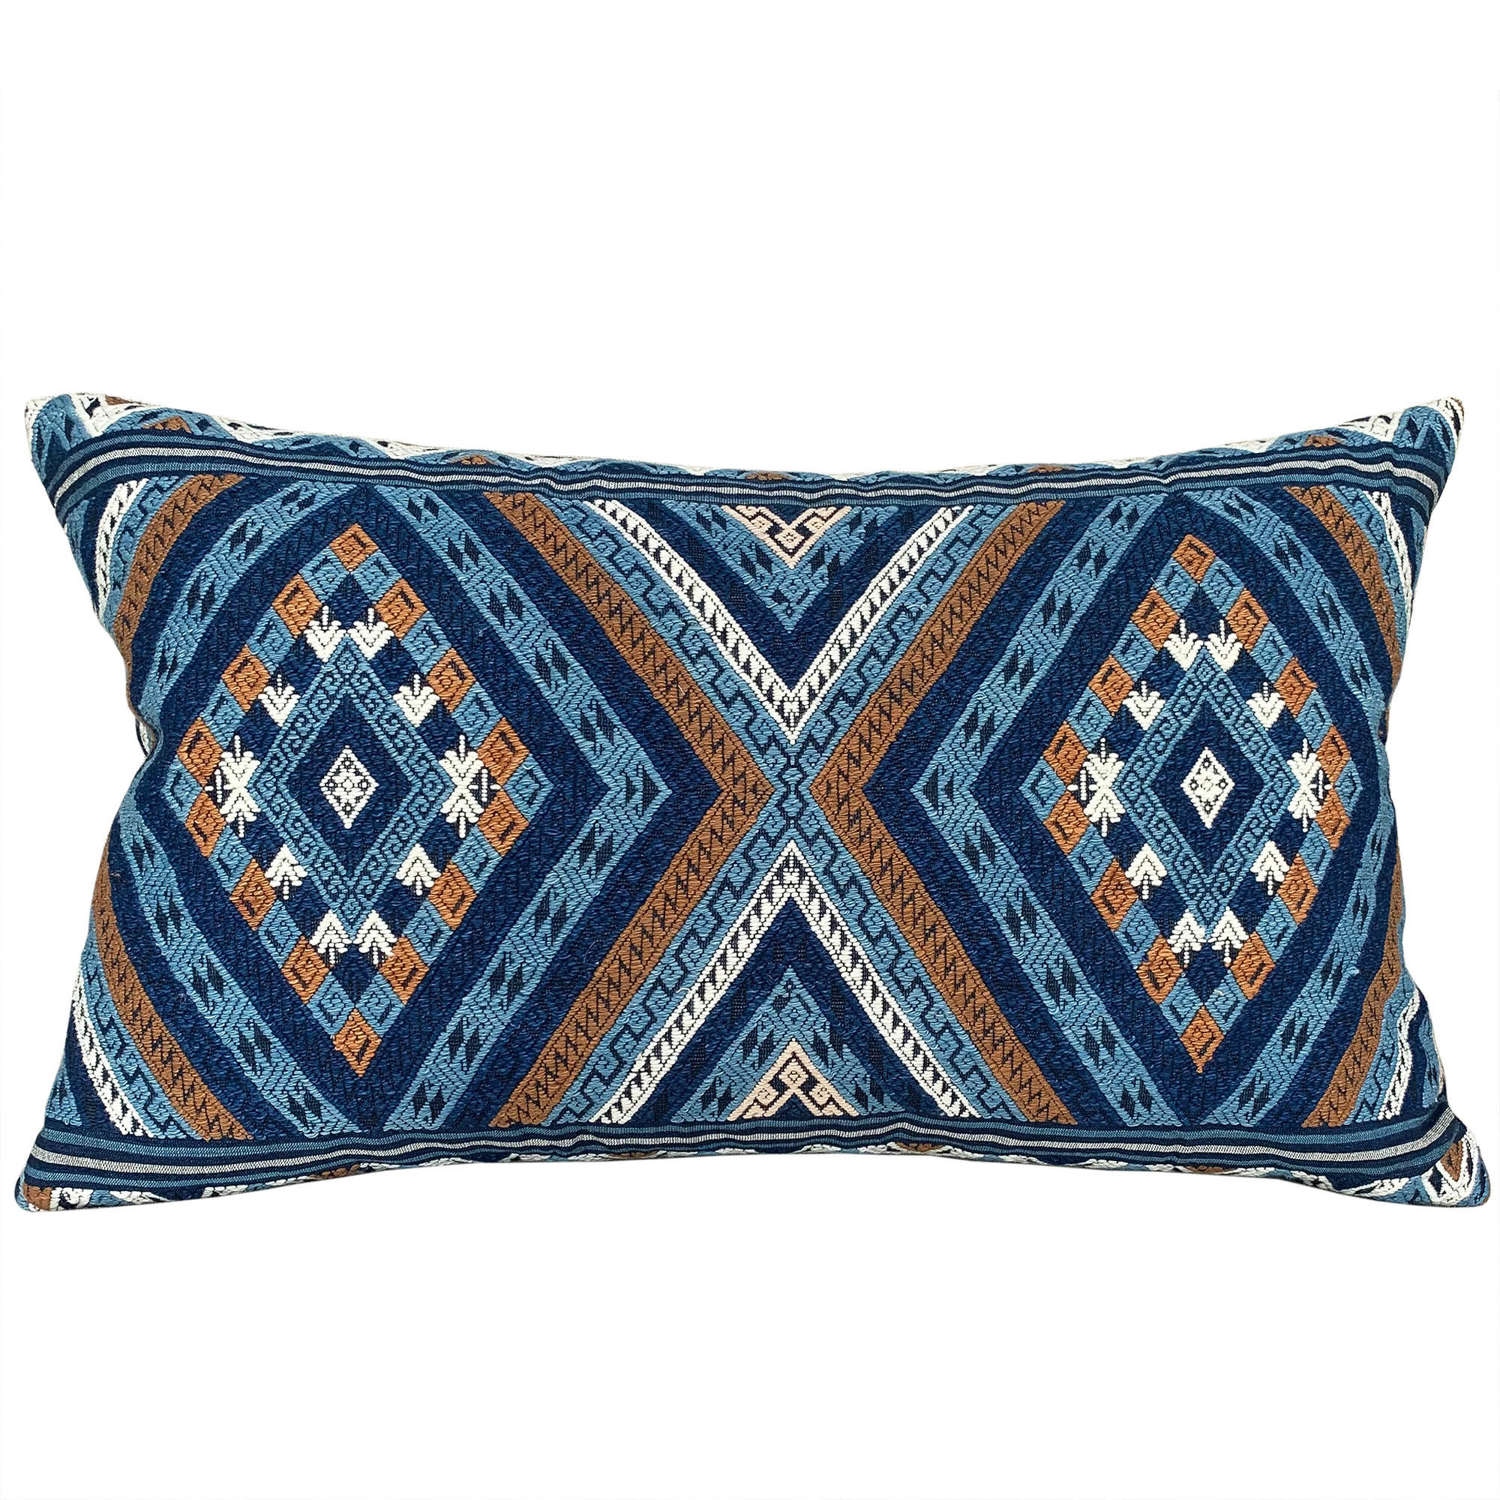 Indigo Lao handwoven cushions